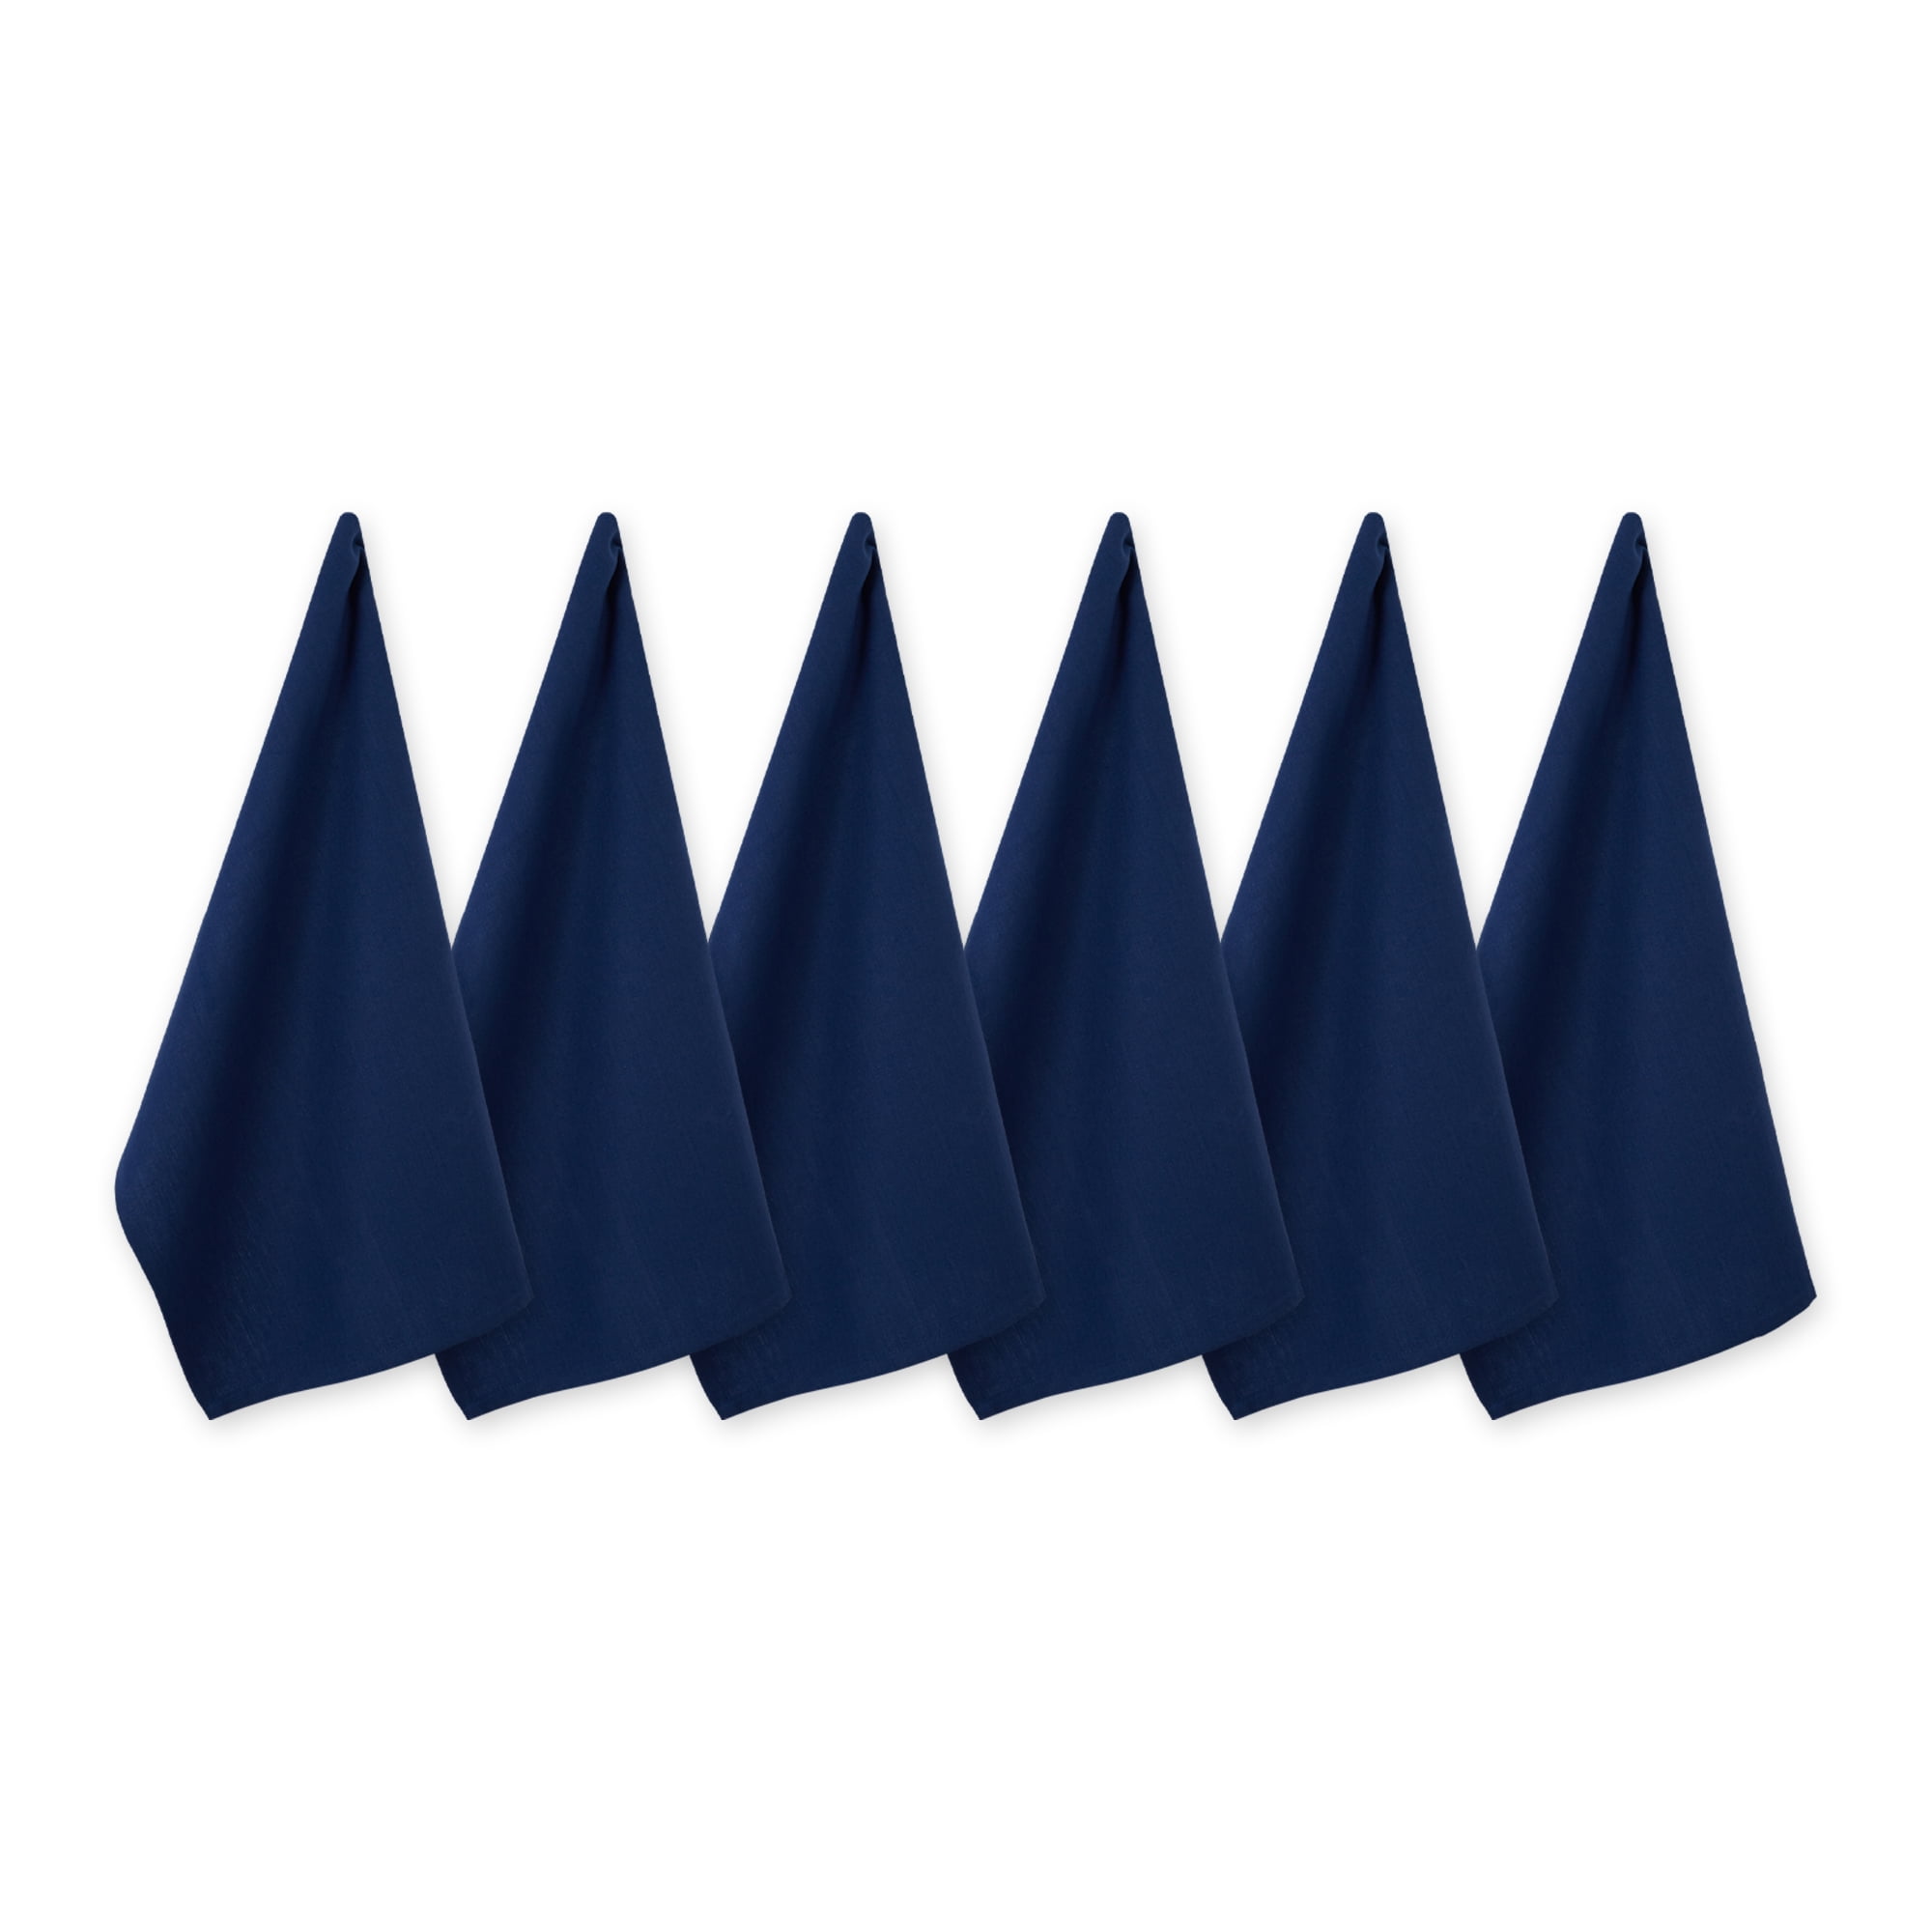 Design Imports Camz34467 Nautical Blue Flat Woven Dishtowel Set - Set Of 6